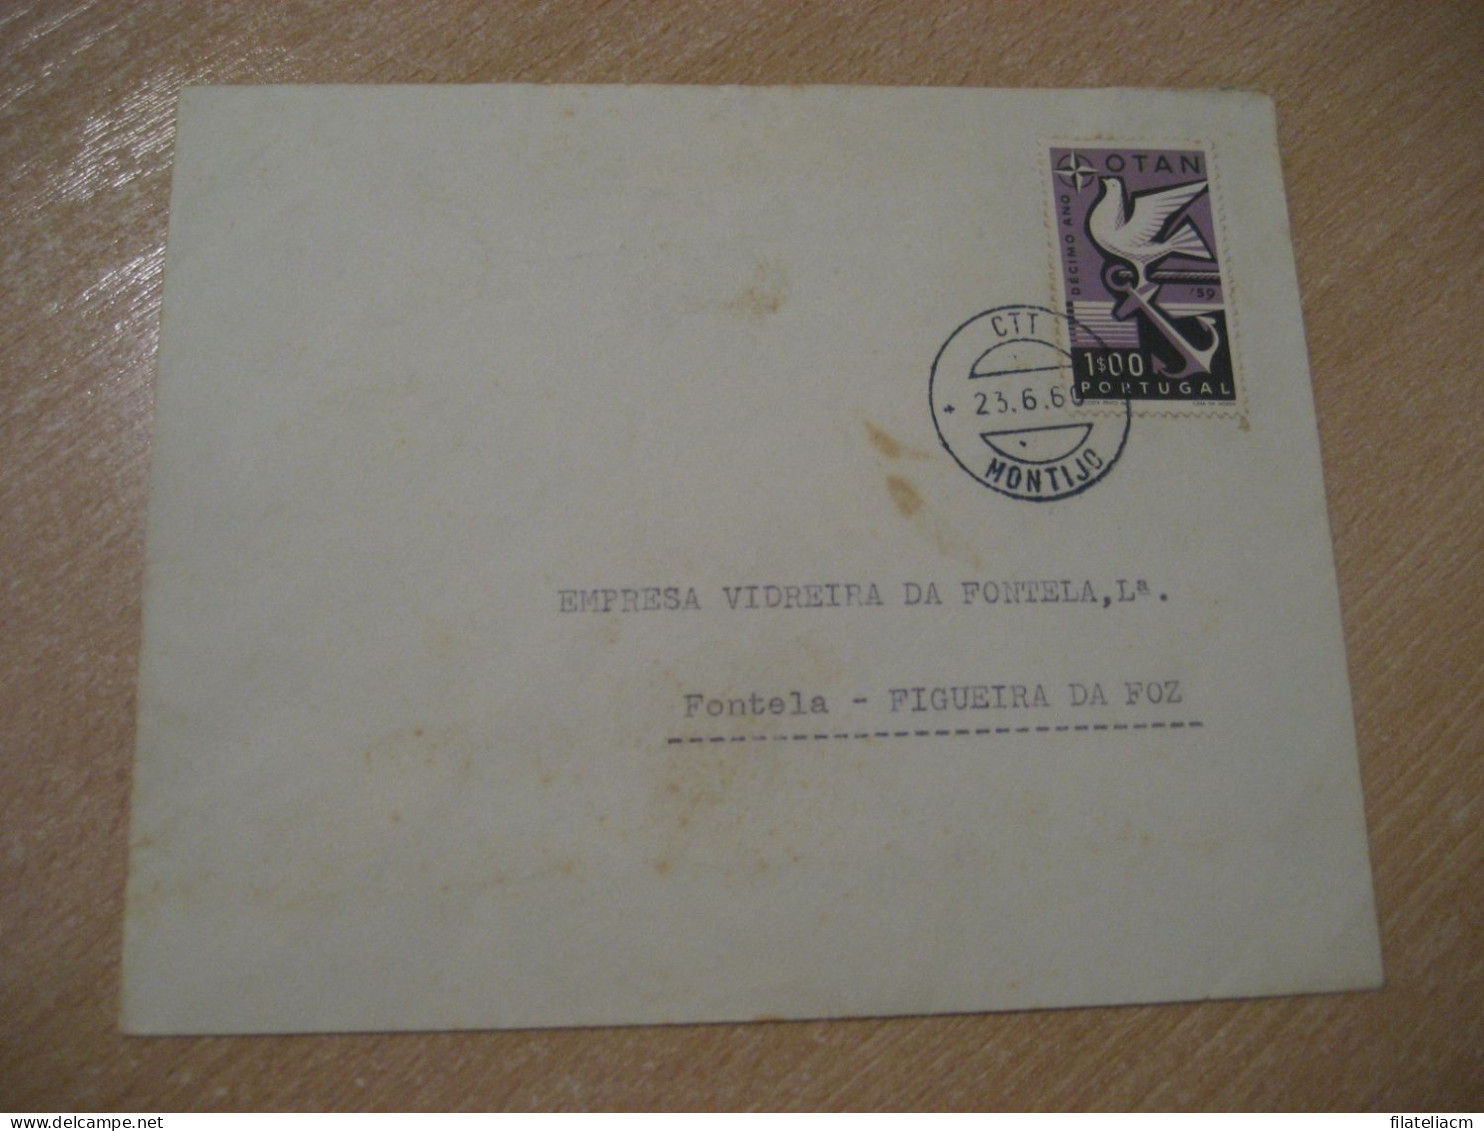 MONTIJO 1960 To Figueira Da Foz NATO OTAN Militar Stamp Cancel Cover PORTUGAL - OTAN